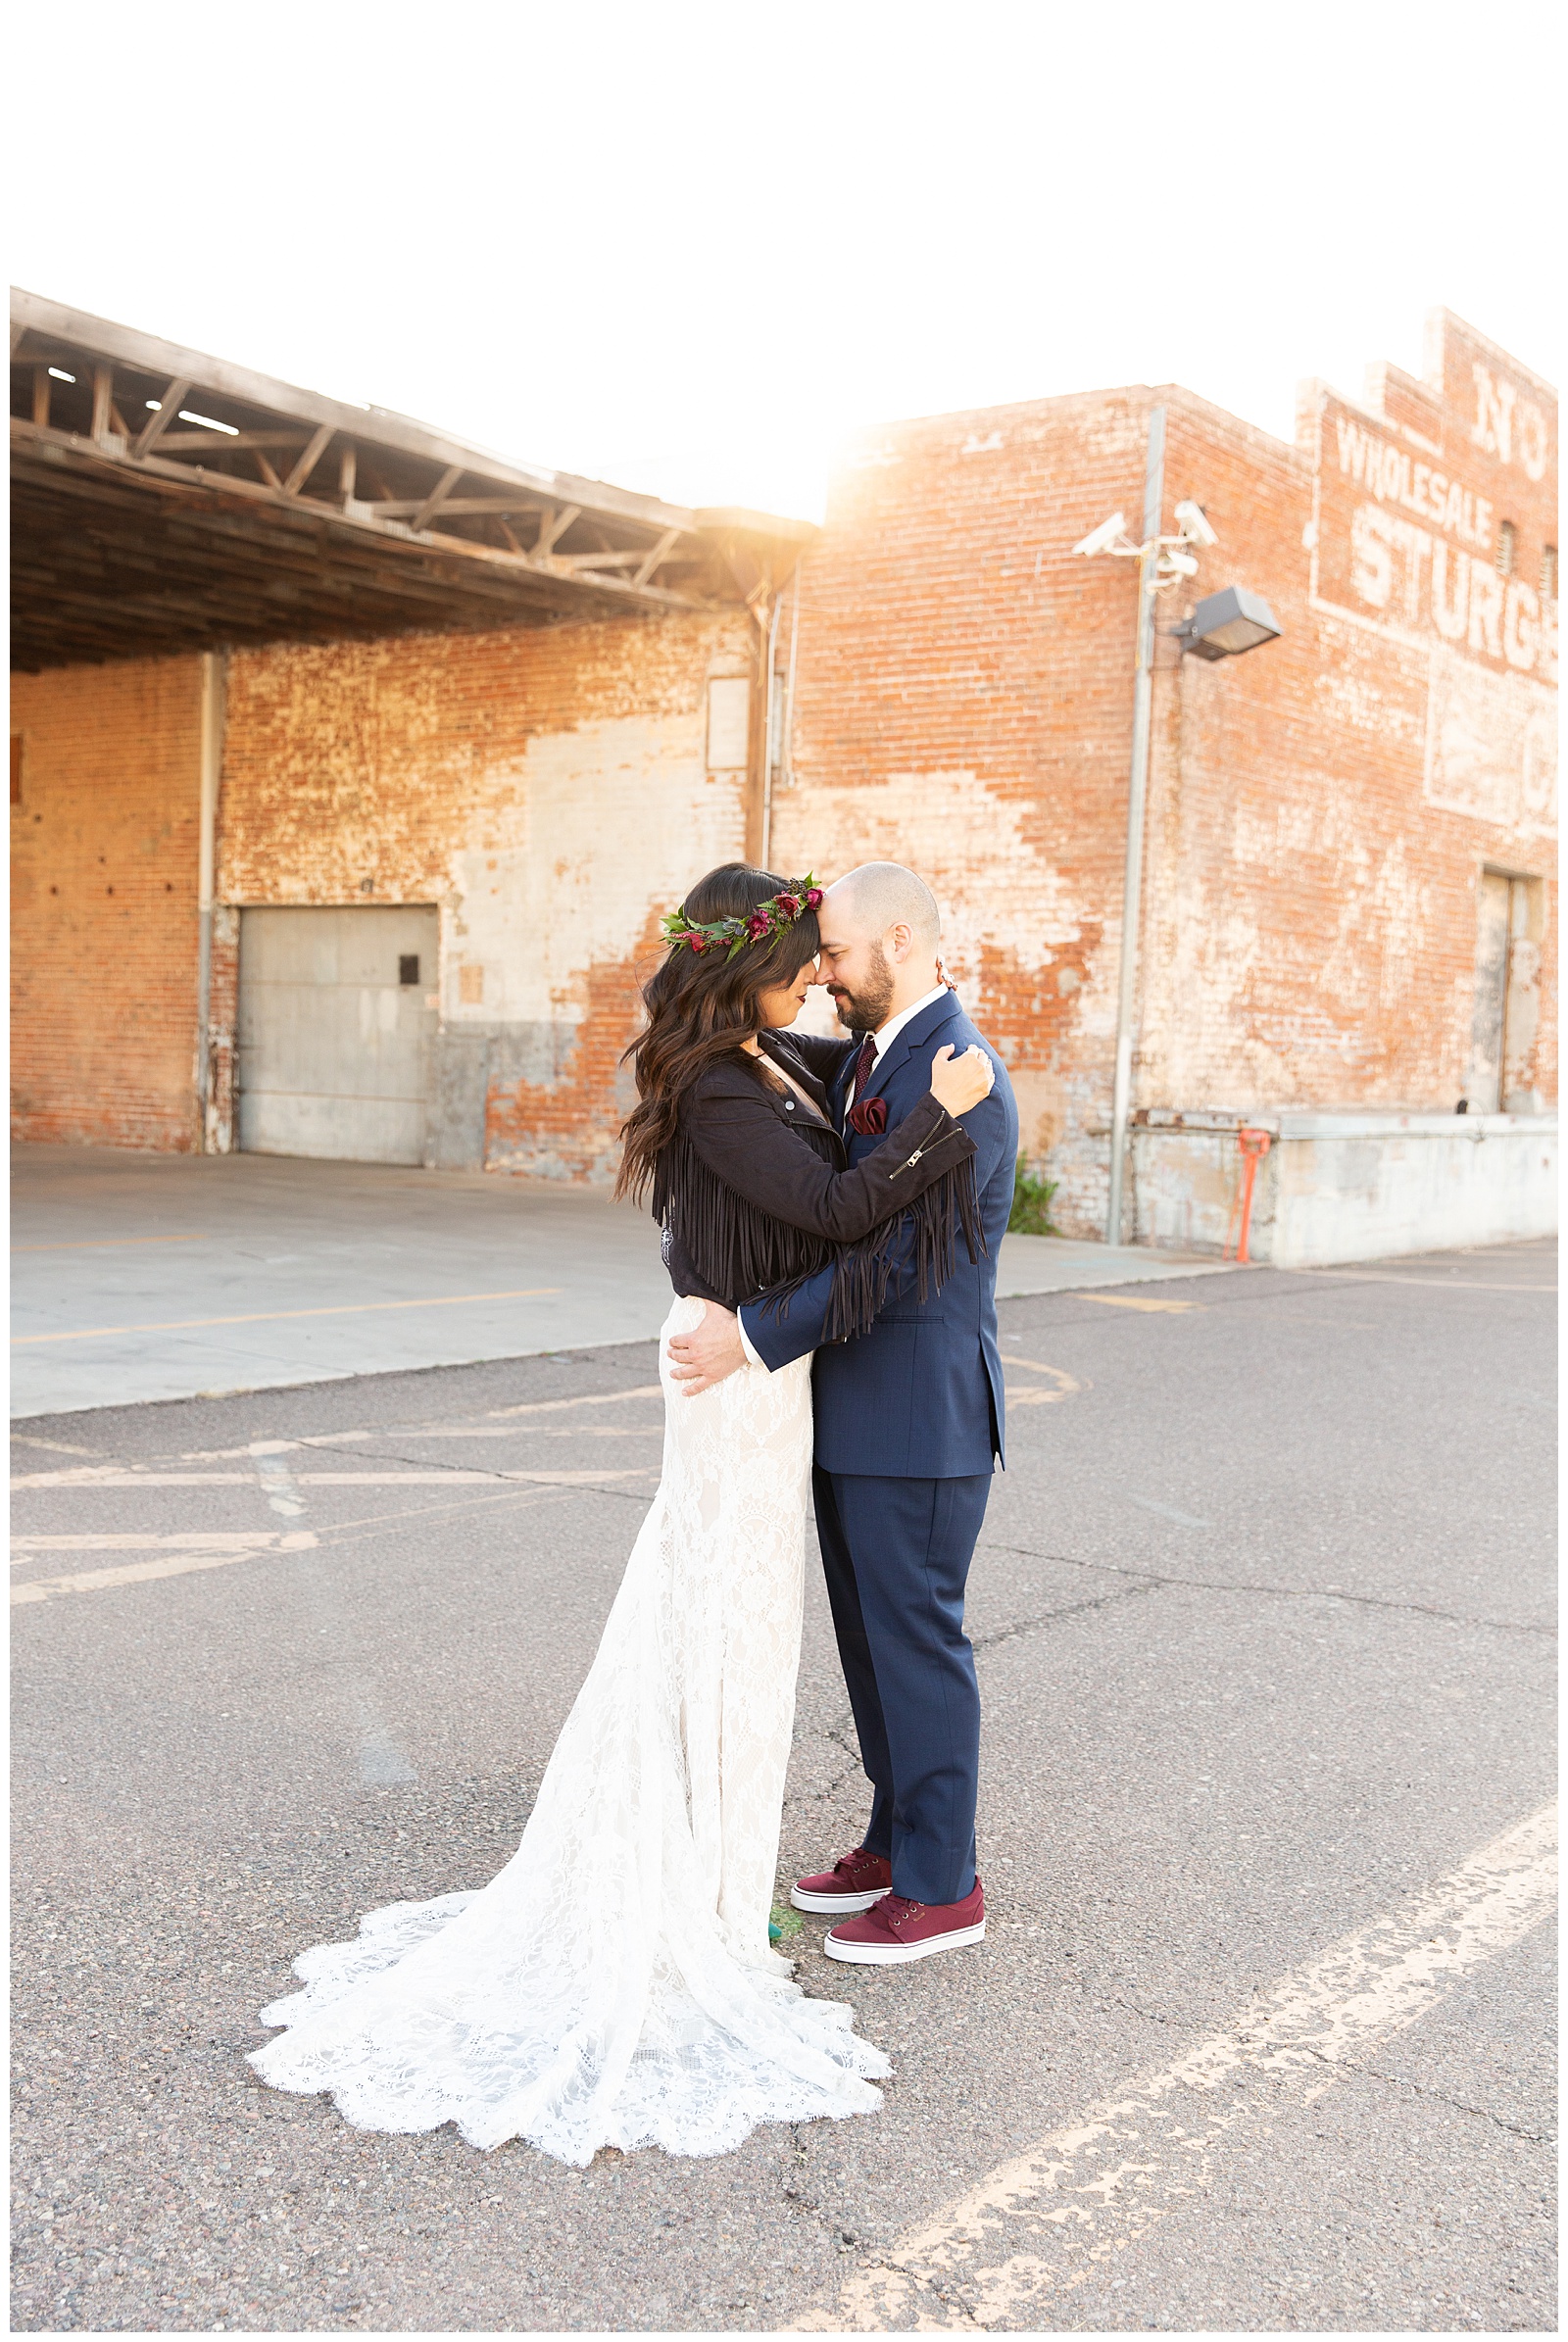 Downtown Phoenix wedding portrait photo